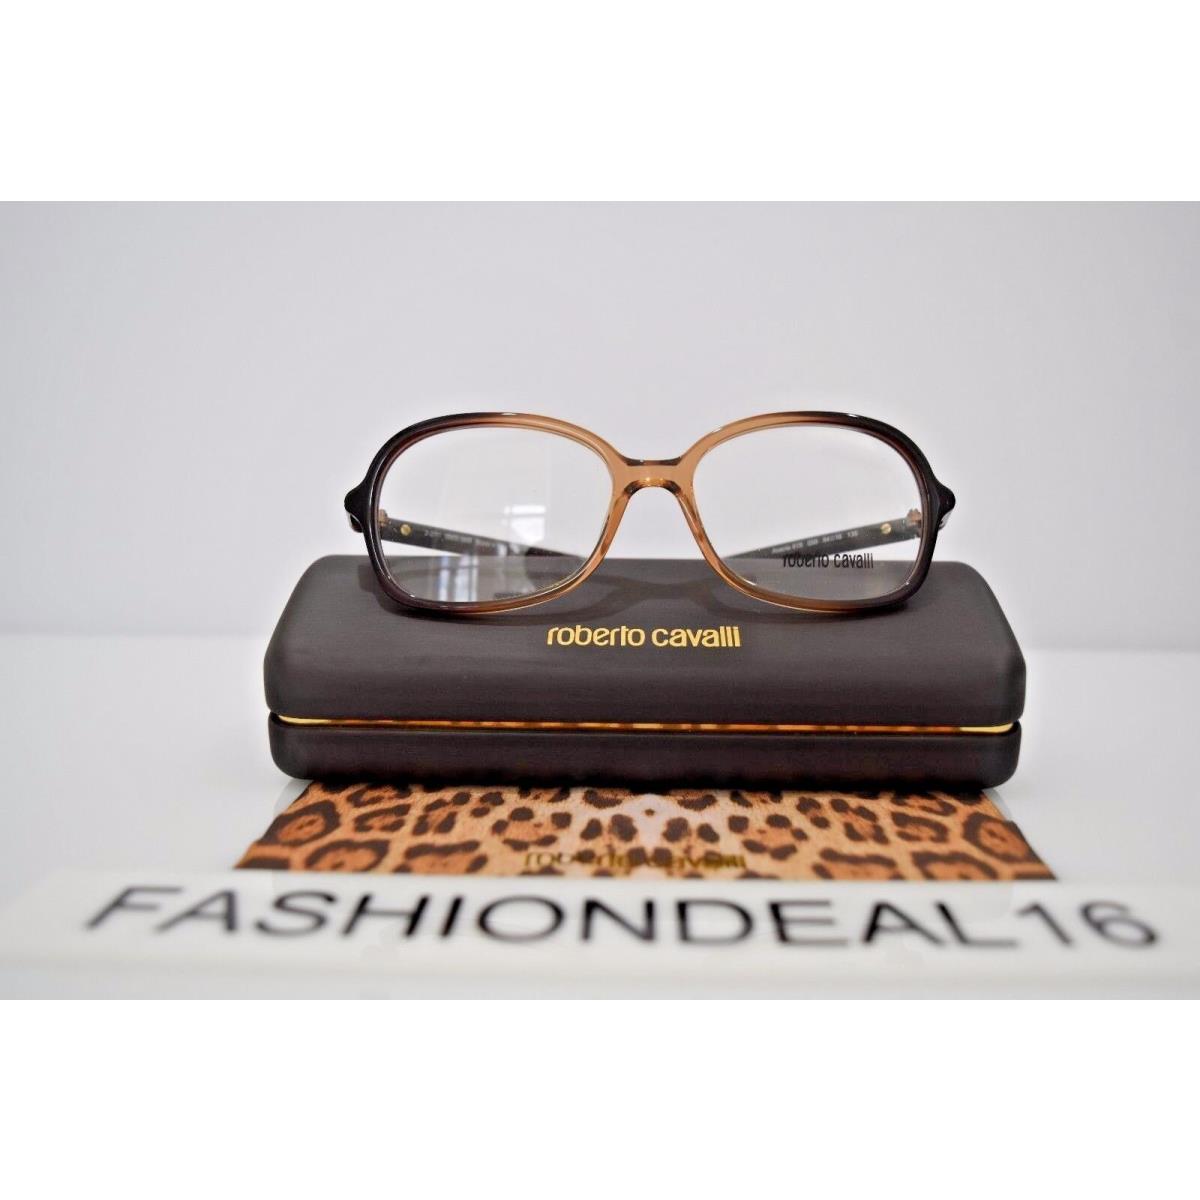 Roberto Cavalli eyeglasses  - Brown/Beige Translucent Frame 0